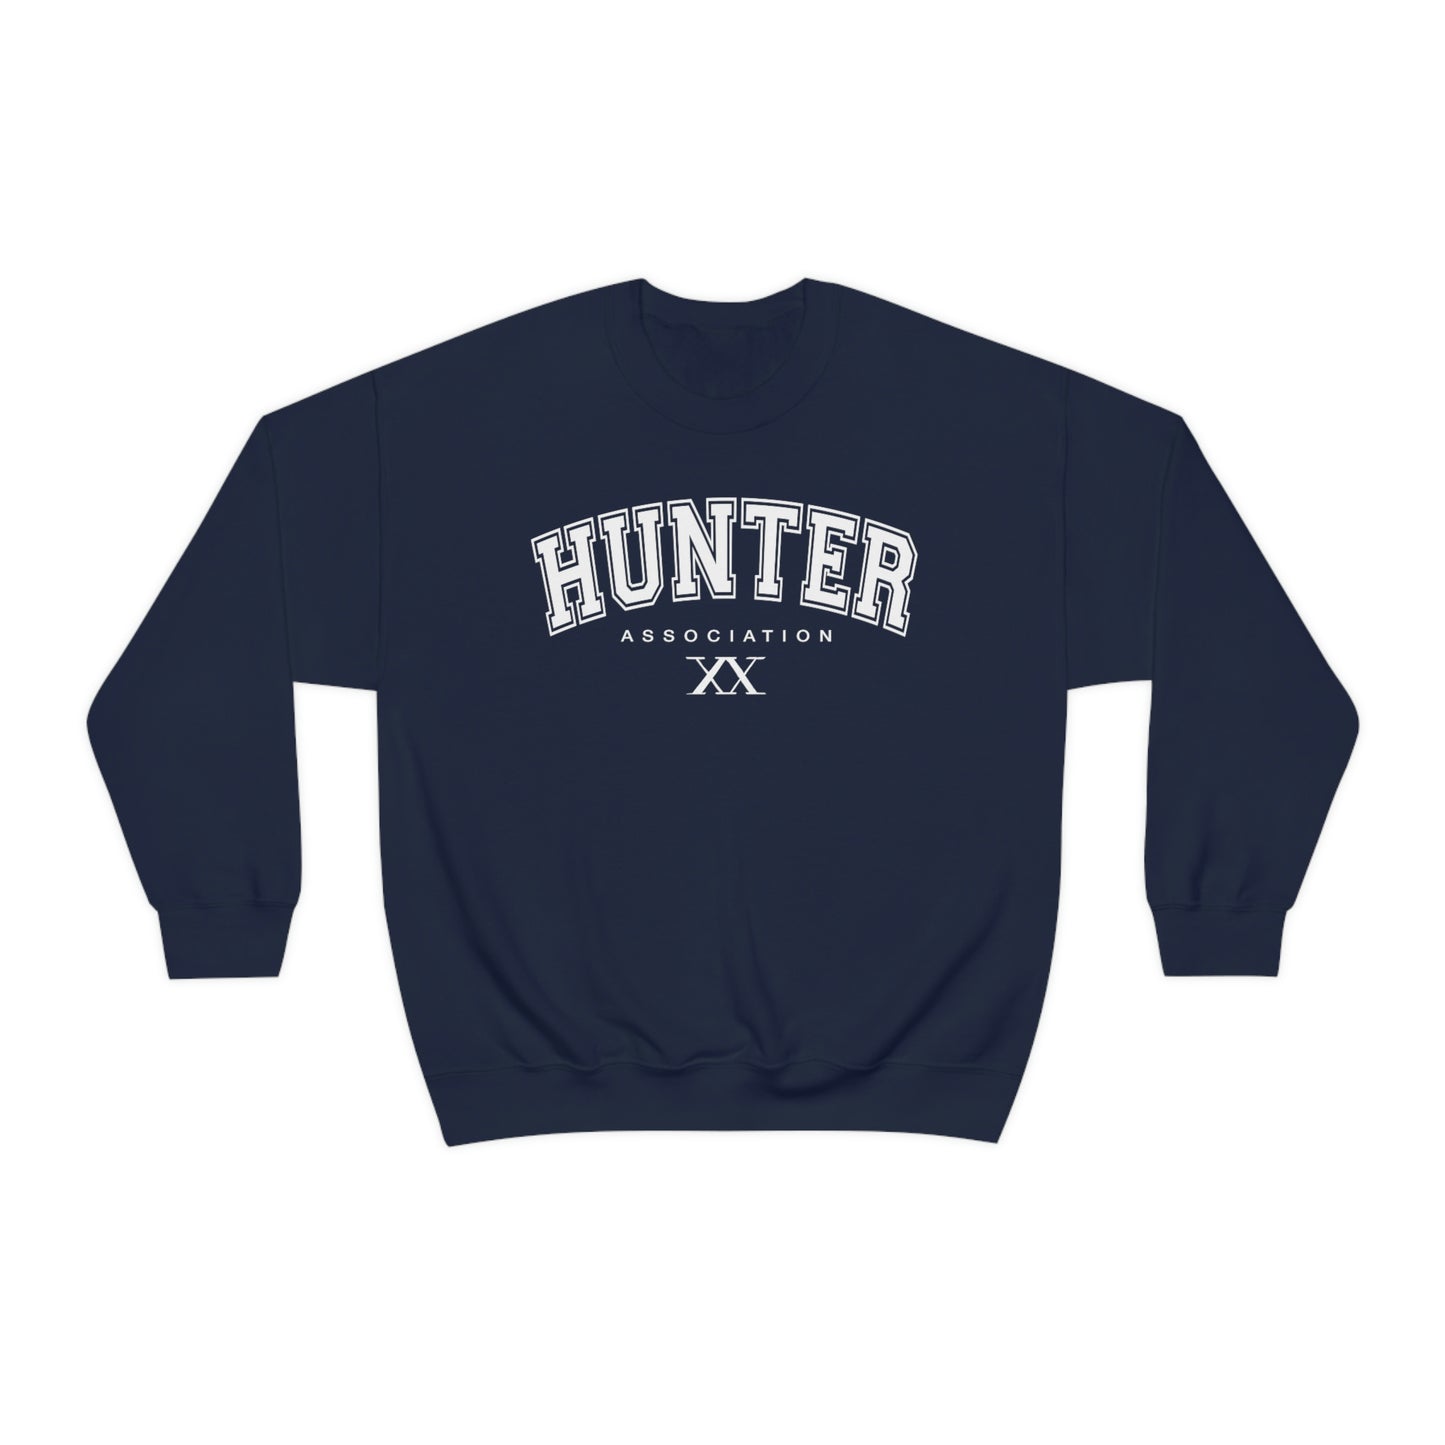 Hunter Associations sweatshirt